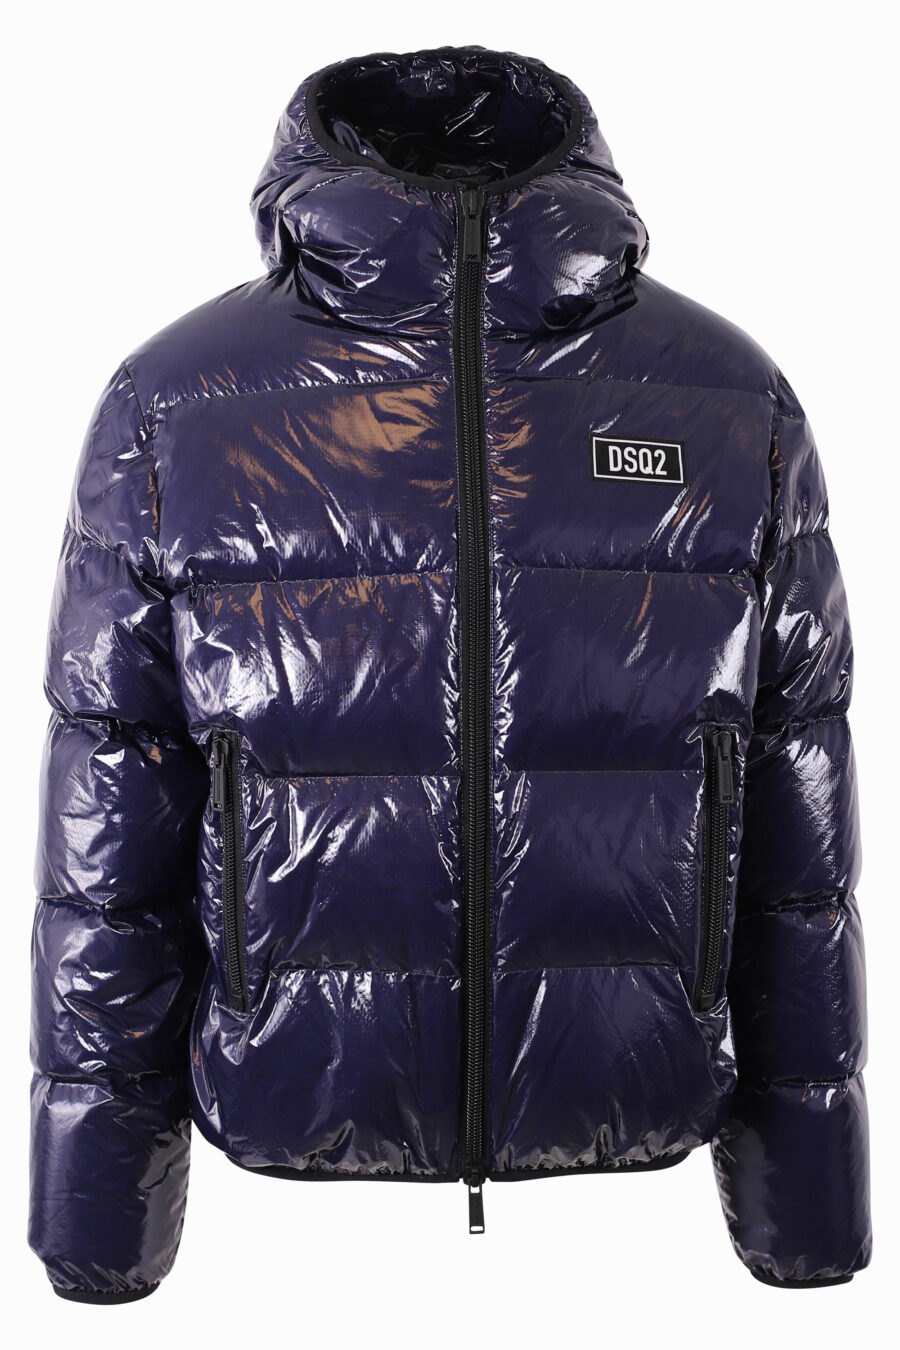 Bright blue jacket with hood and mini logo - IMG 1082